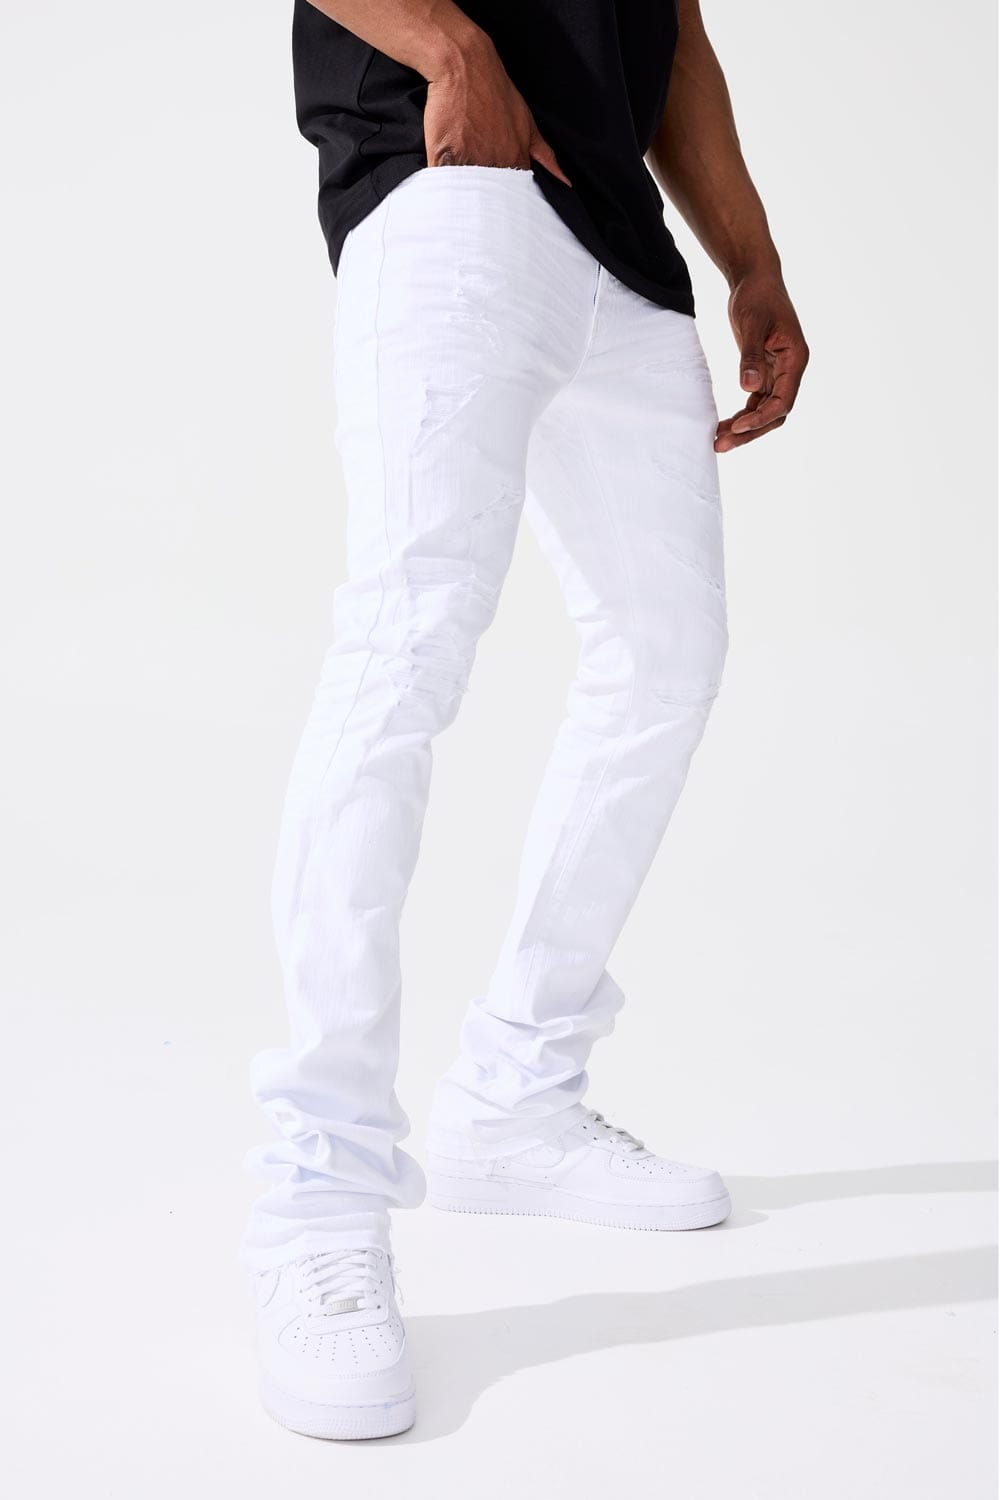 Jordan Craig Martin Stacked - Tribeca Twill Pants White / 28